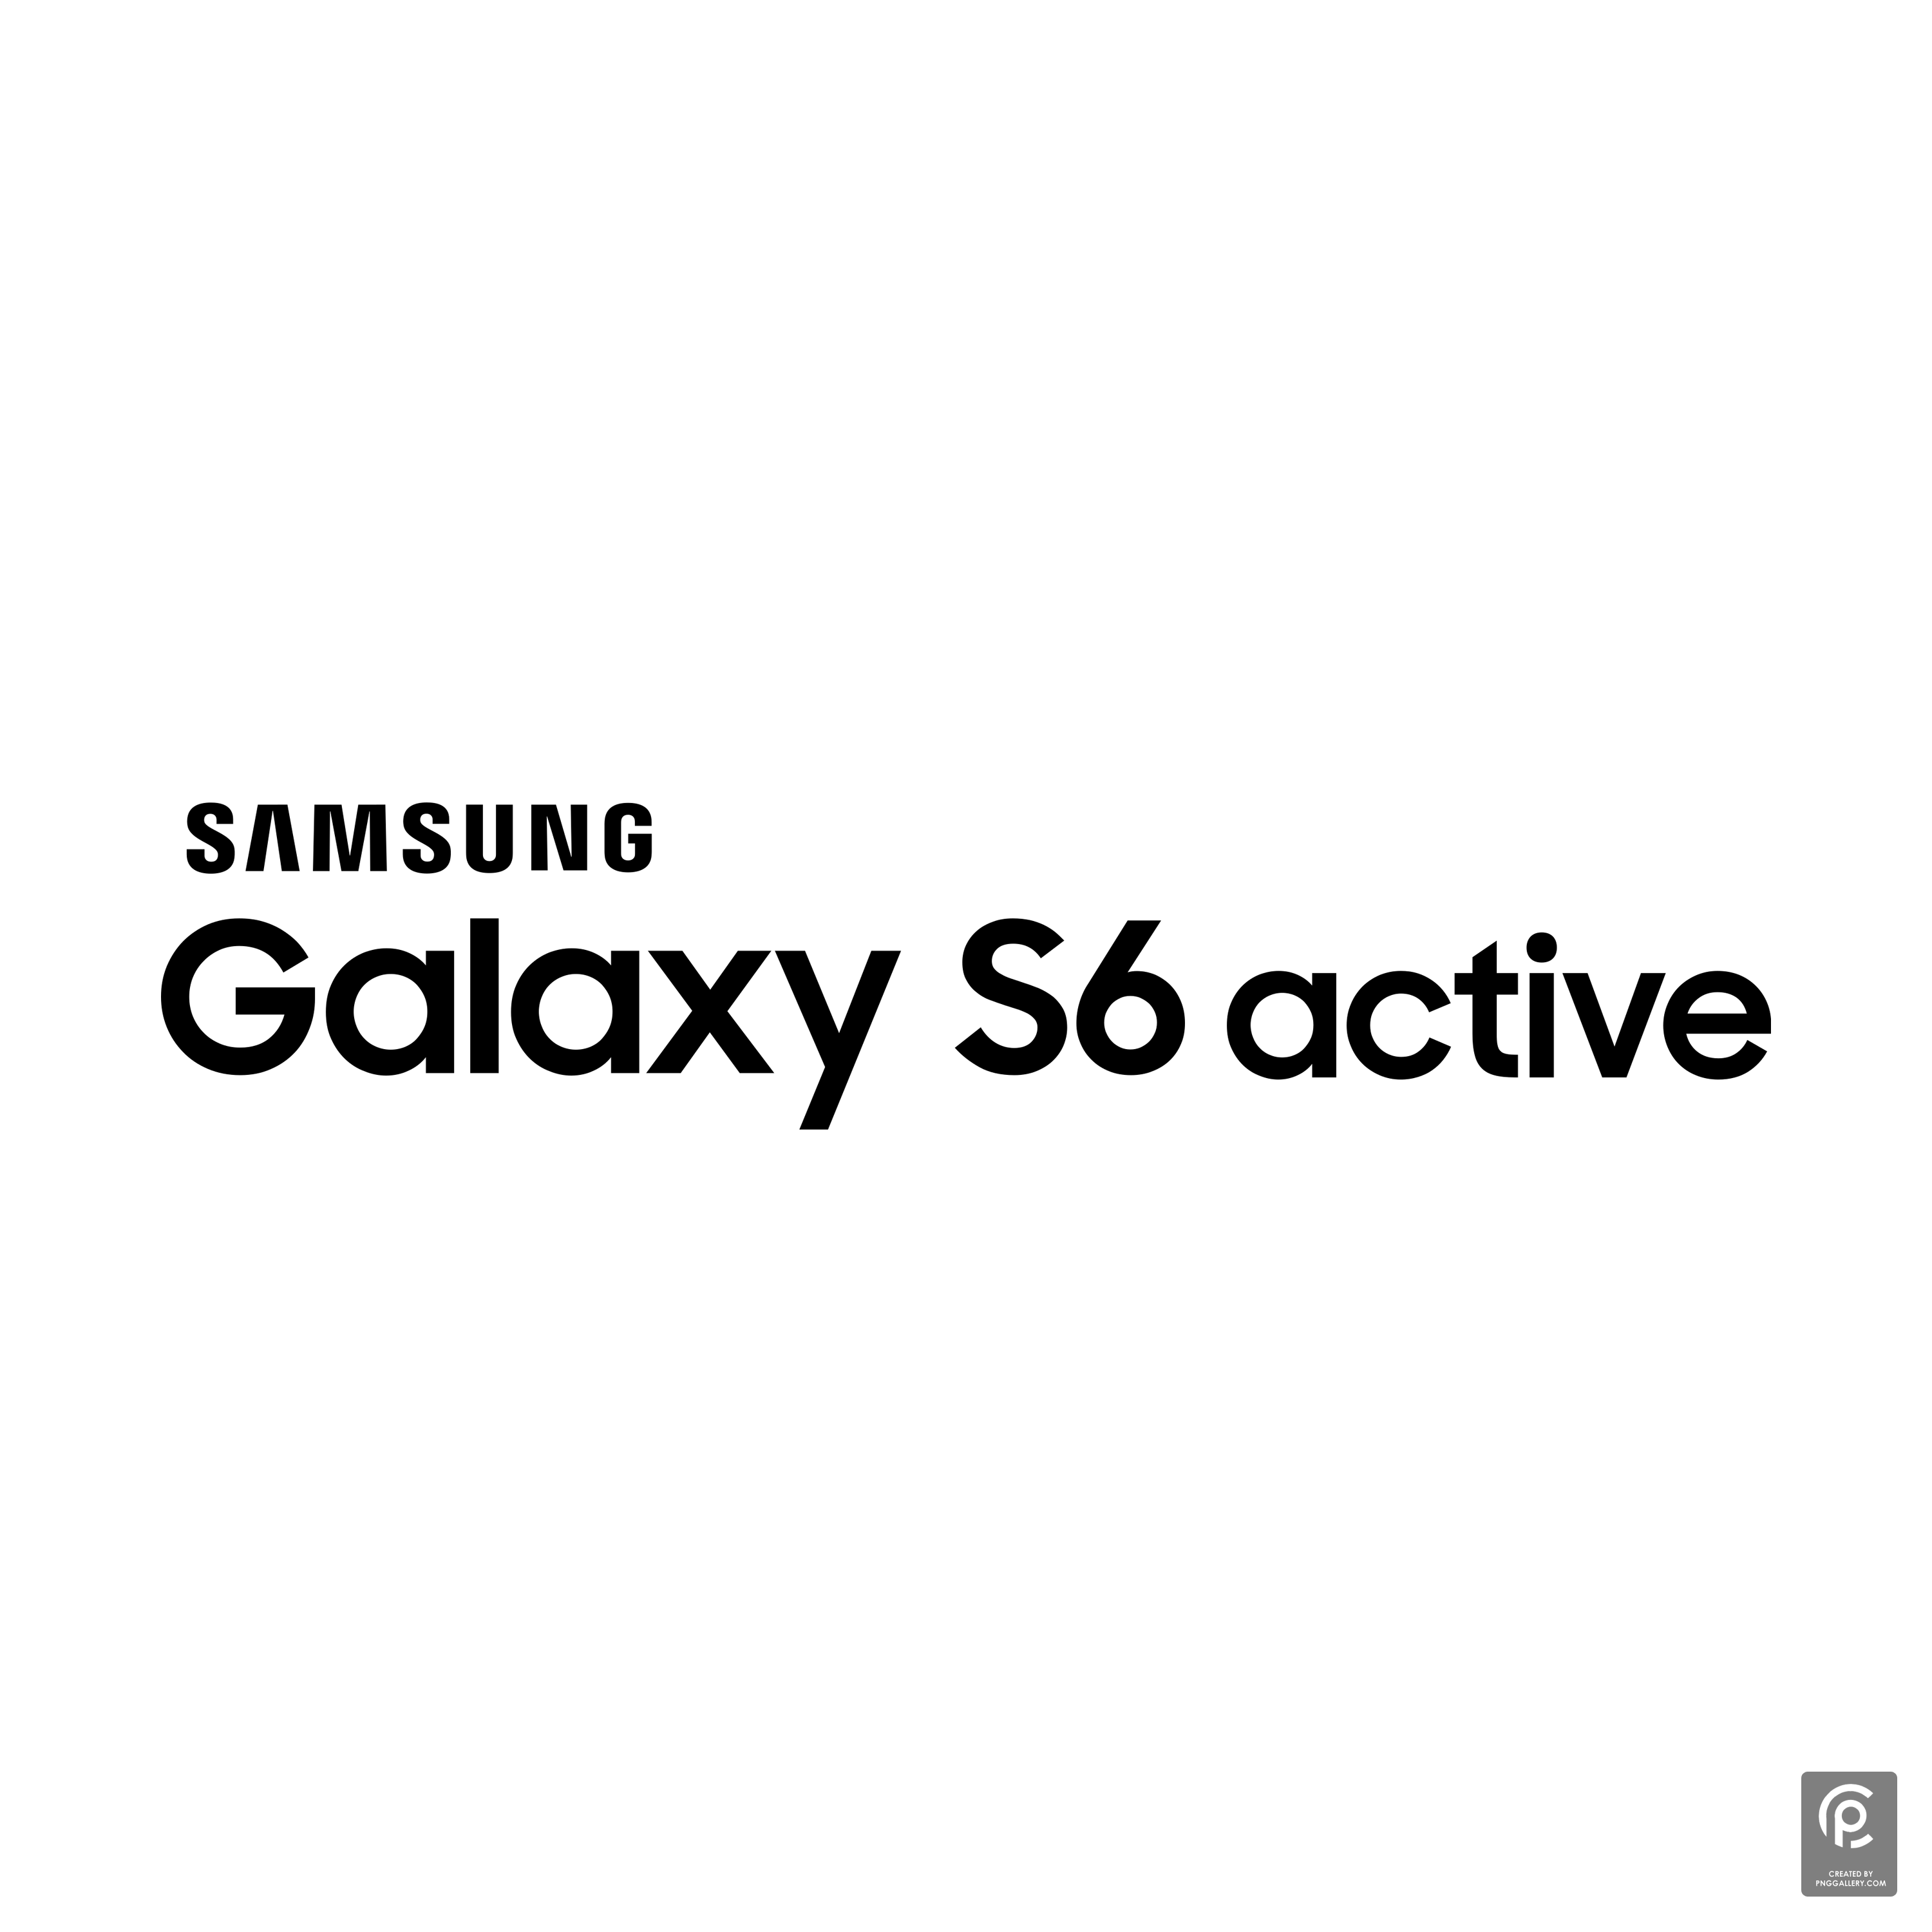 Samsung Galaxy S6 Active Logo Transparent Clipart